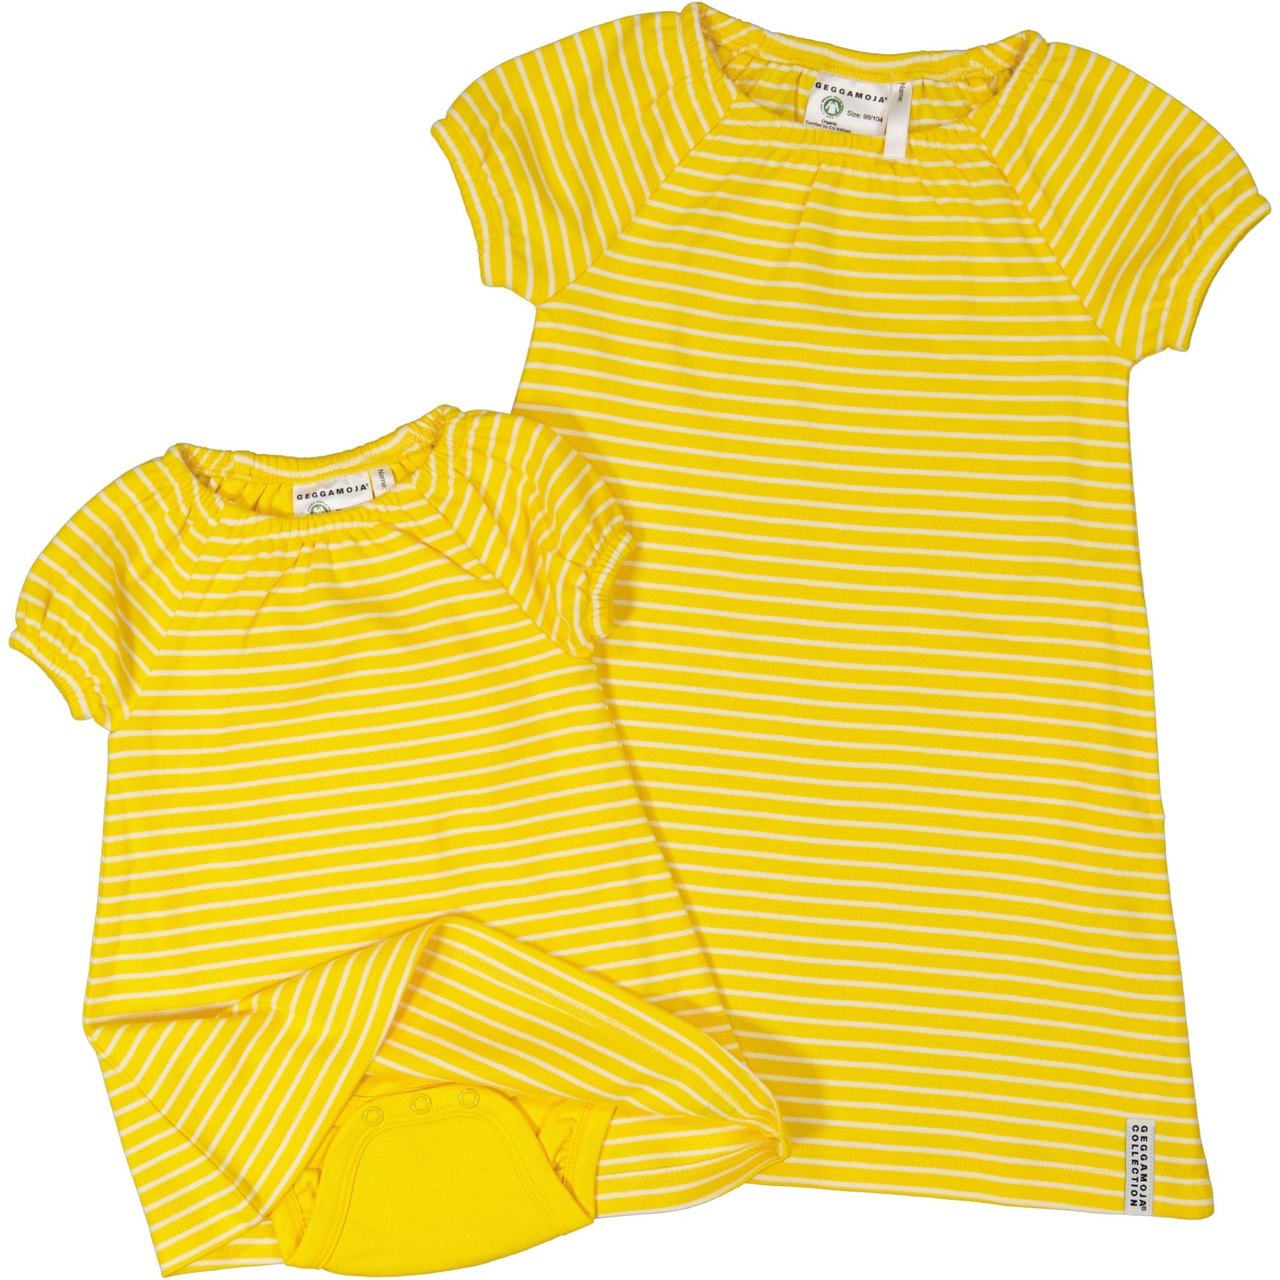 Singoalla dress Yellow/white 15